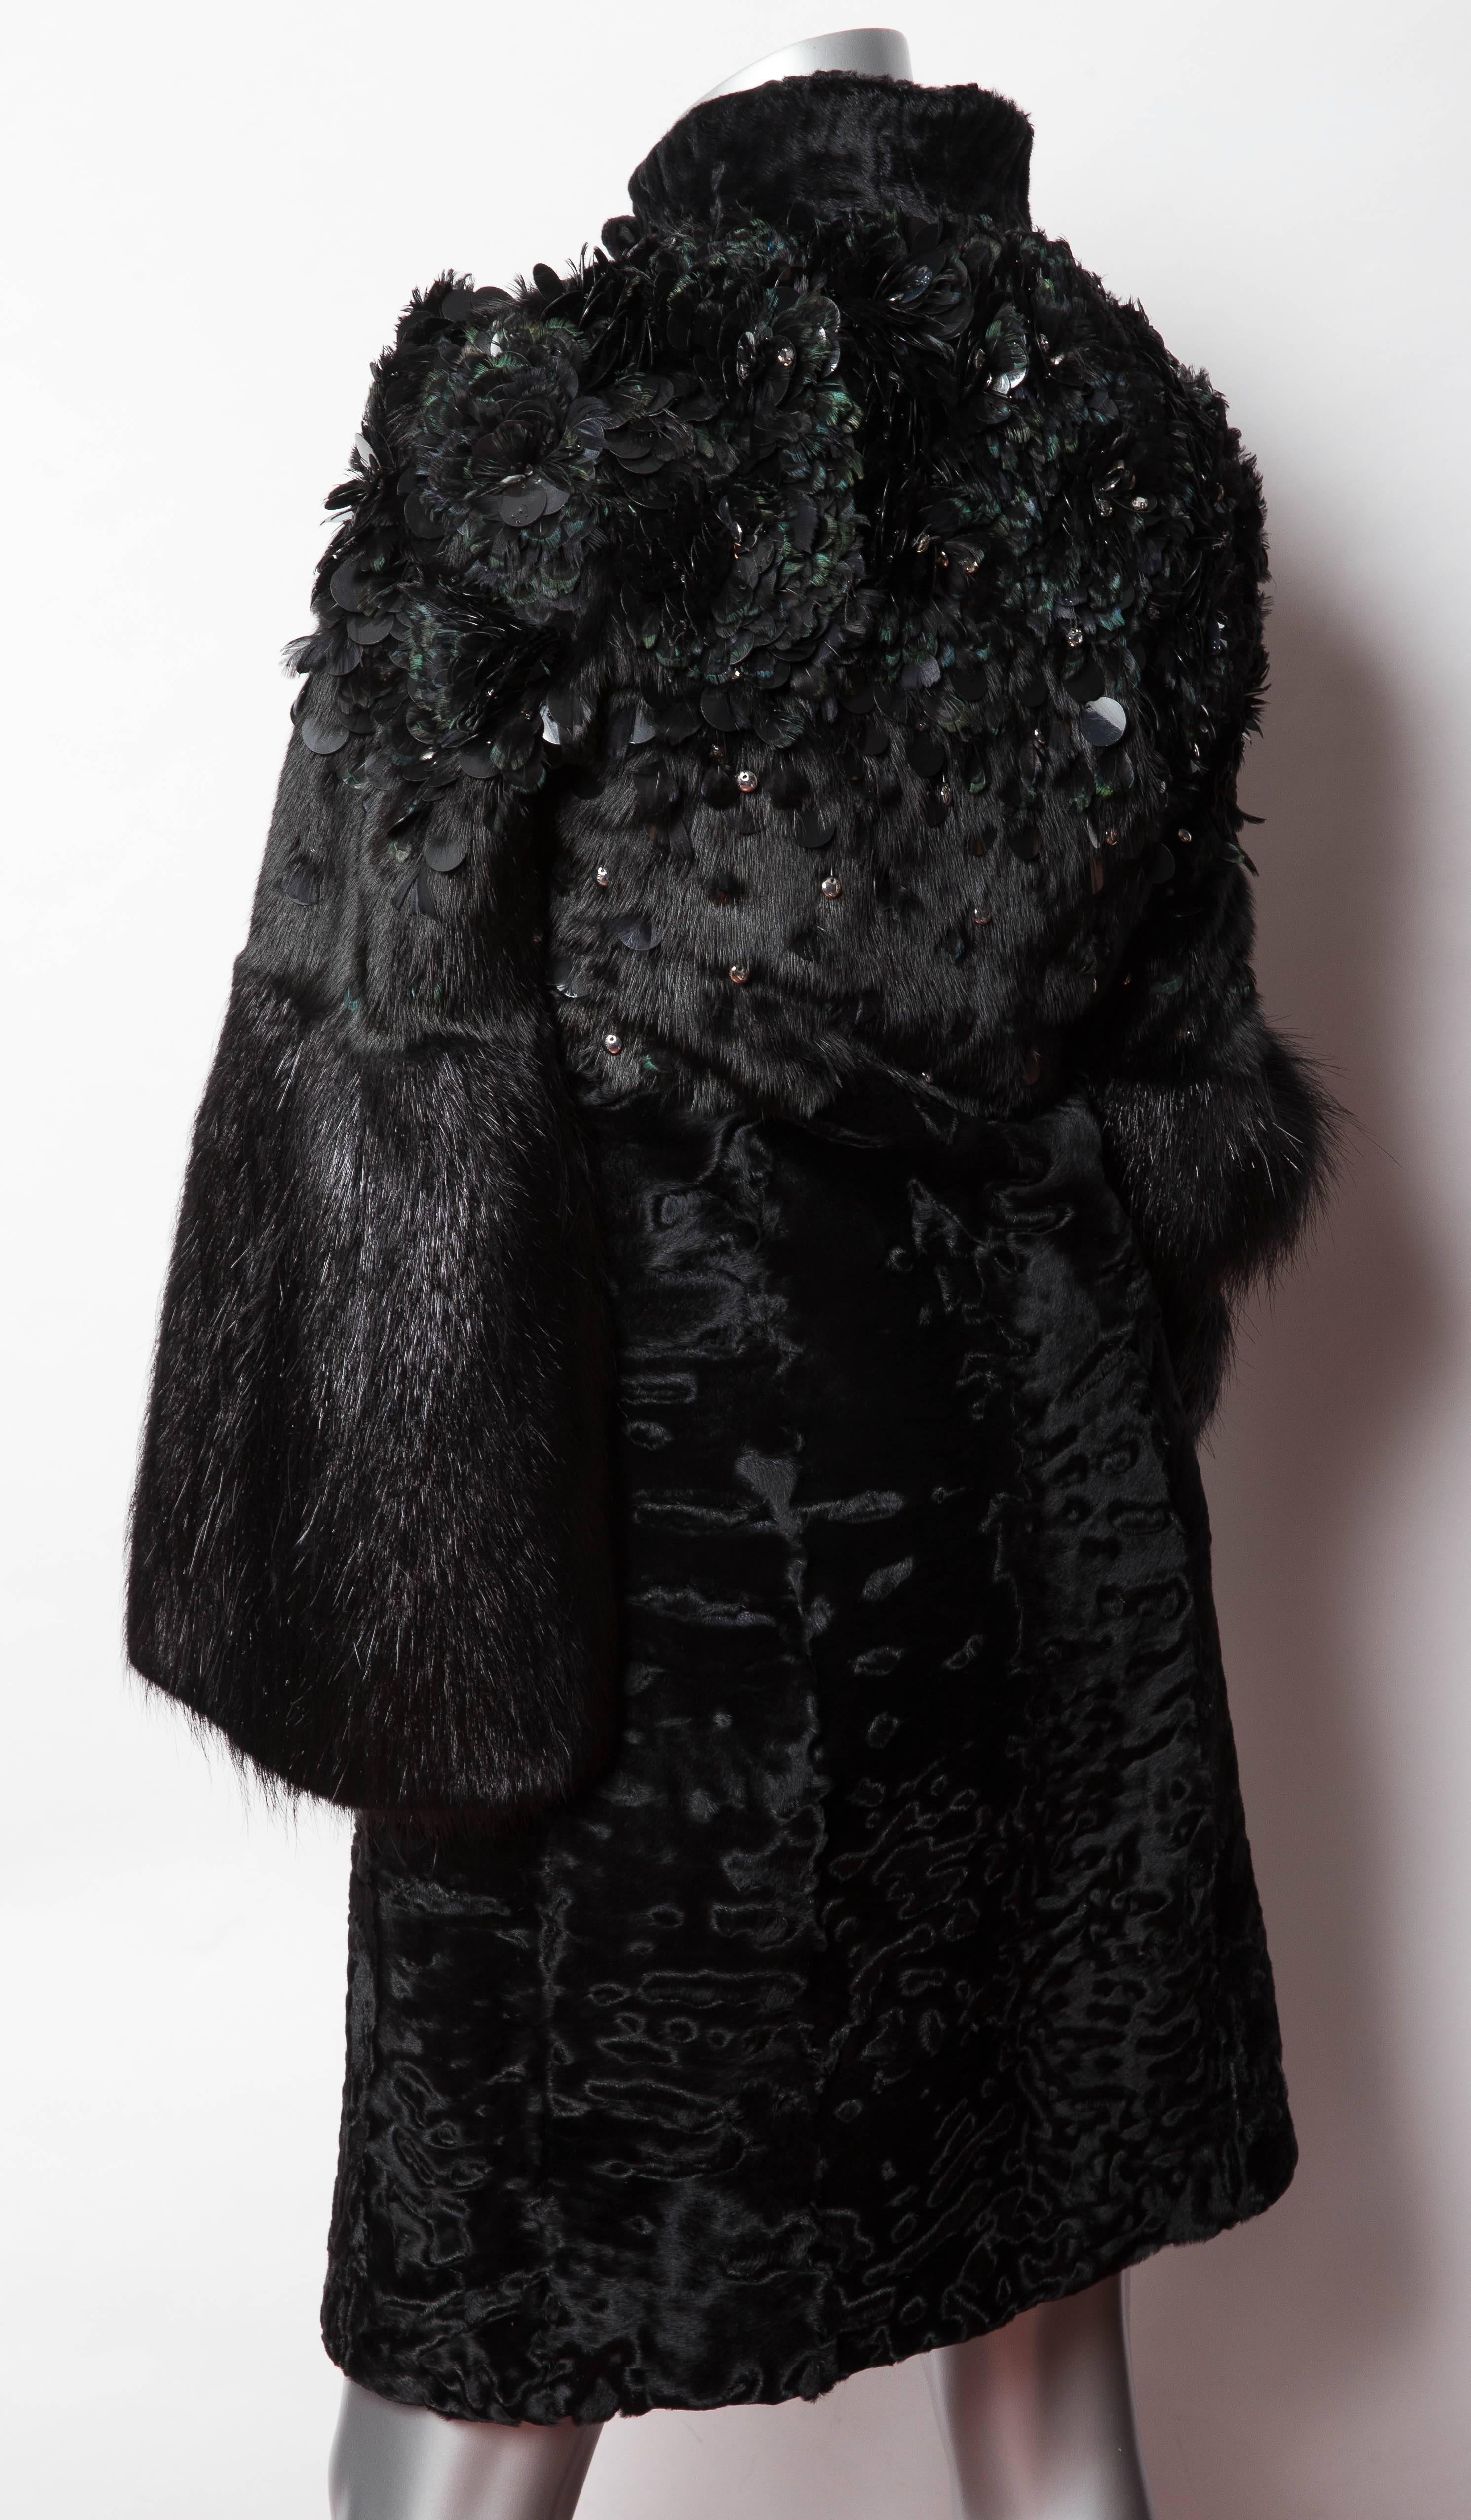 Gucci Runway Mink and Persian Lamb Coat w/ Paillettes and Crystals - Size 4 / 6 2